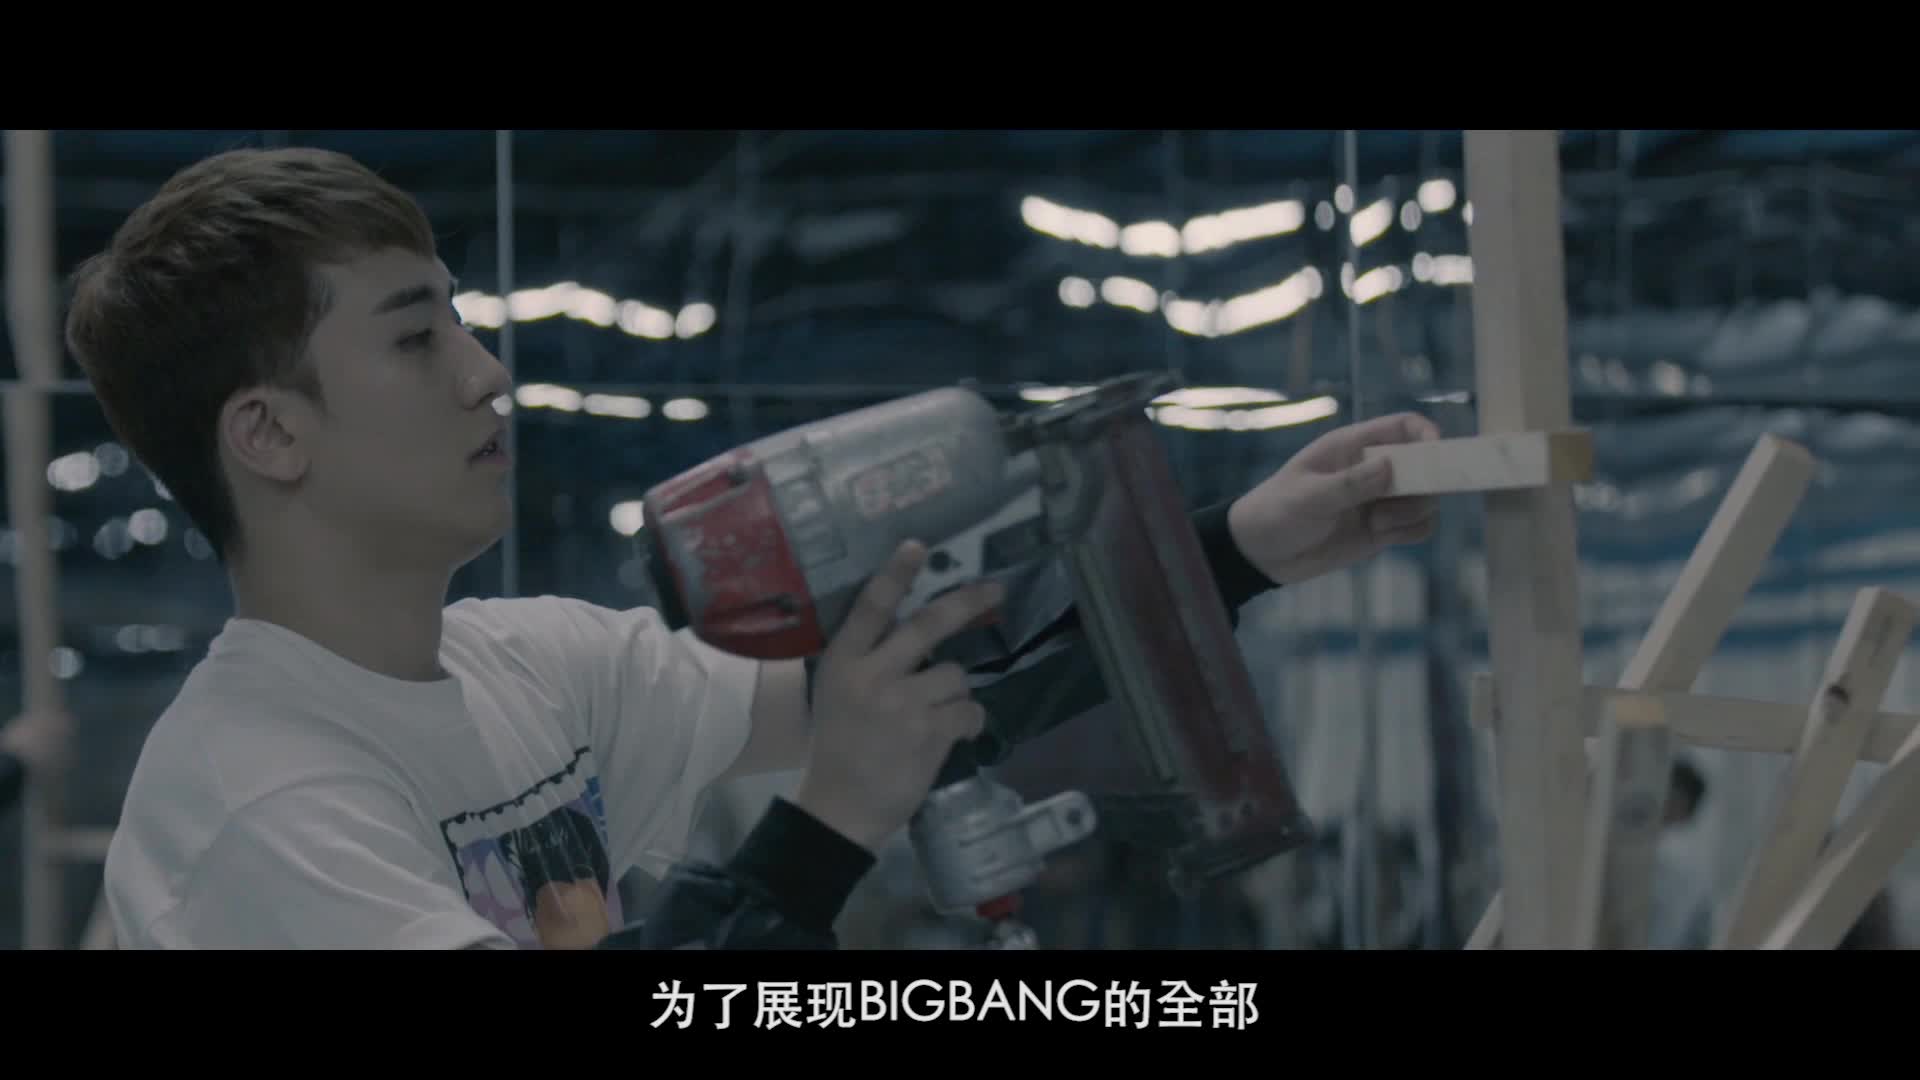 BIGBANG – ‘A TO Z IN SHANGHAI’ TEASER VIDEO #2